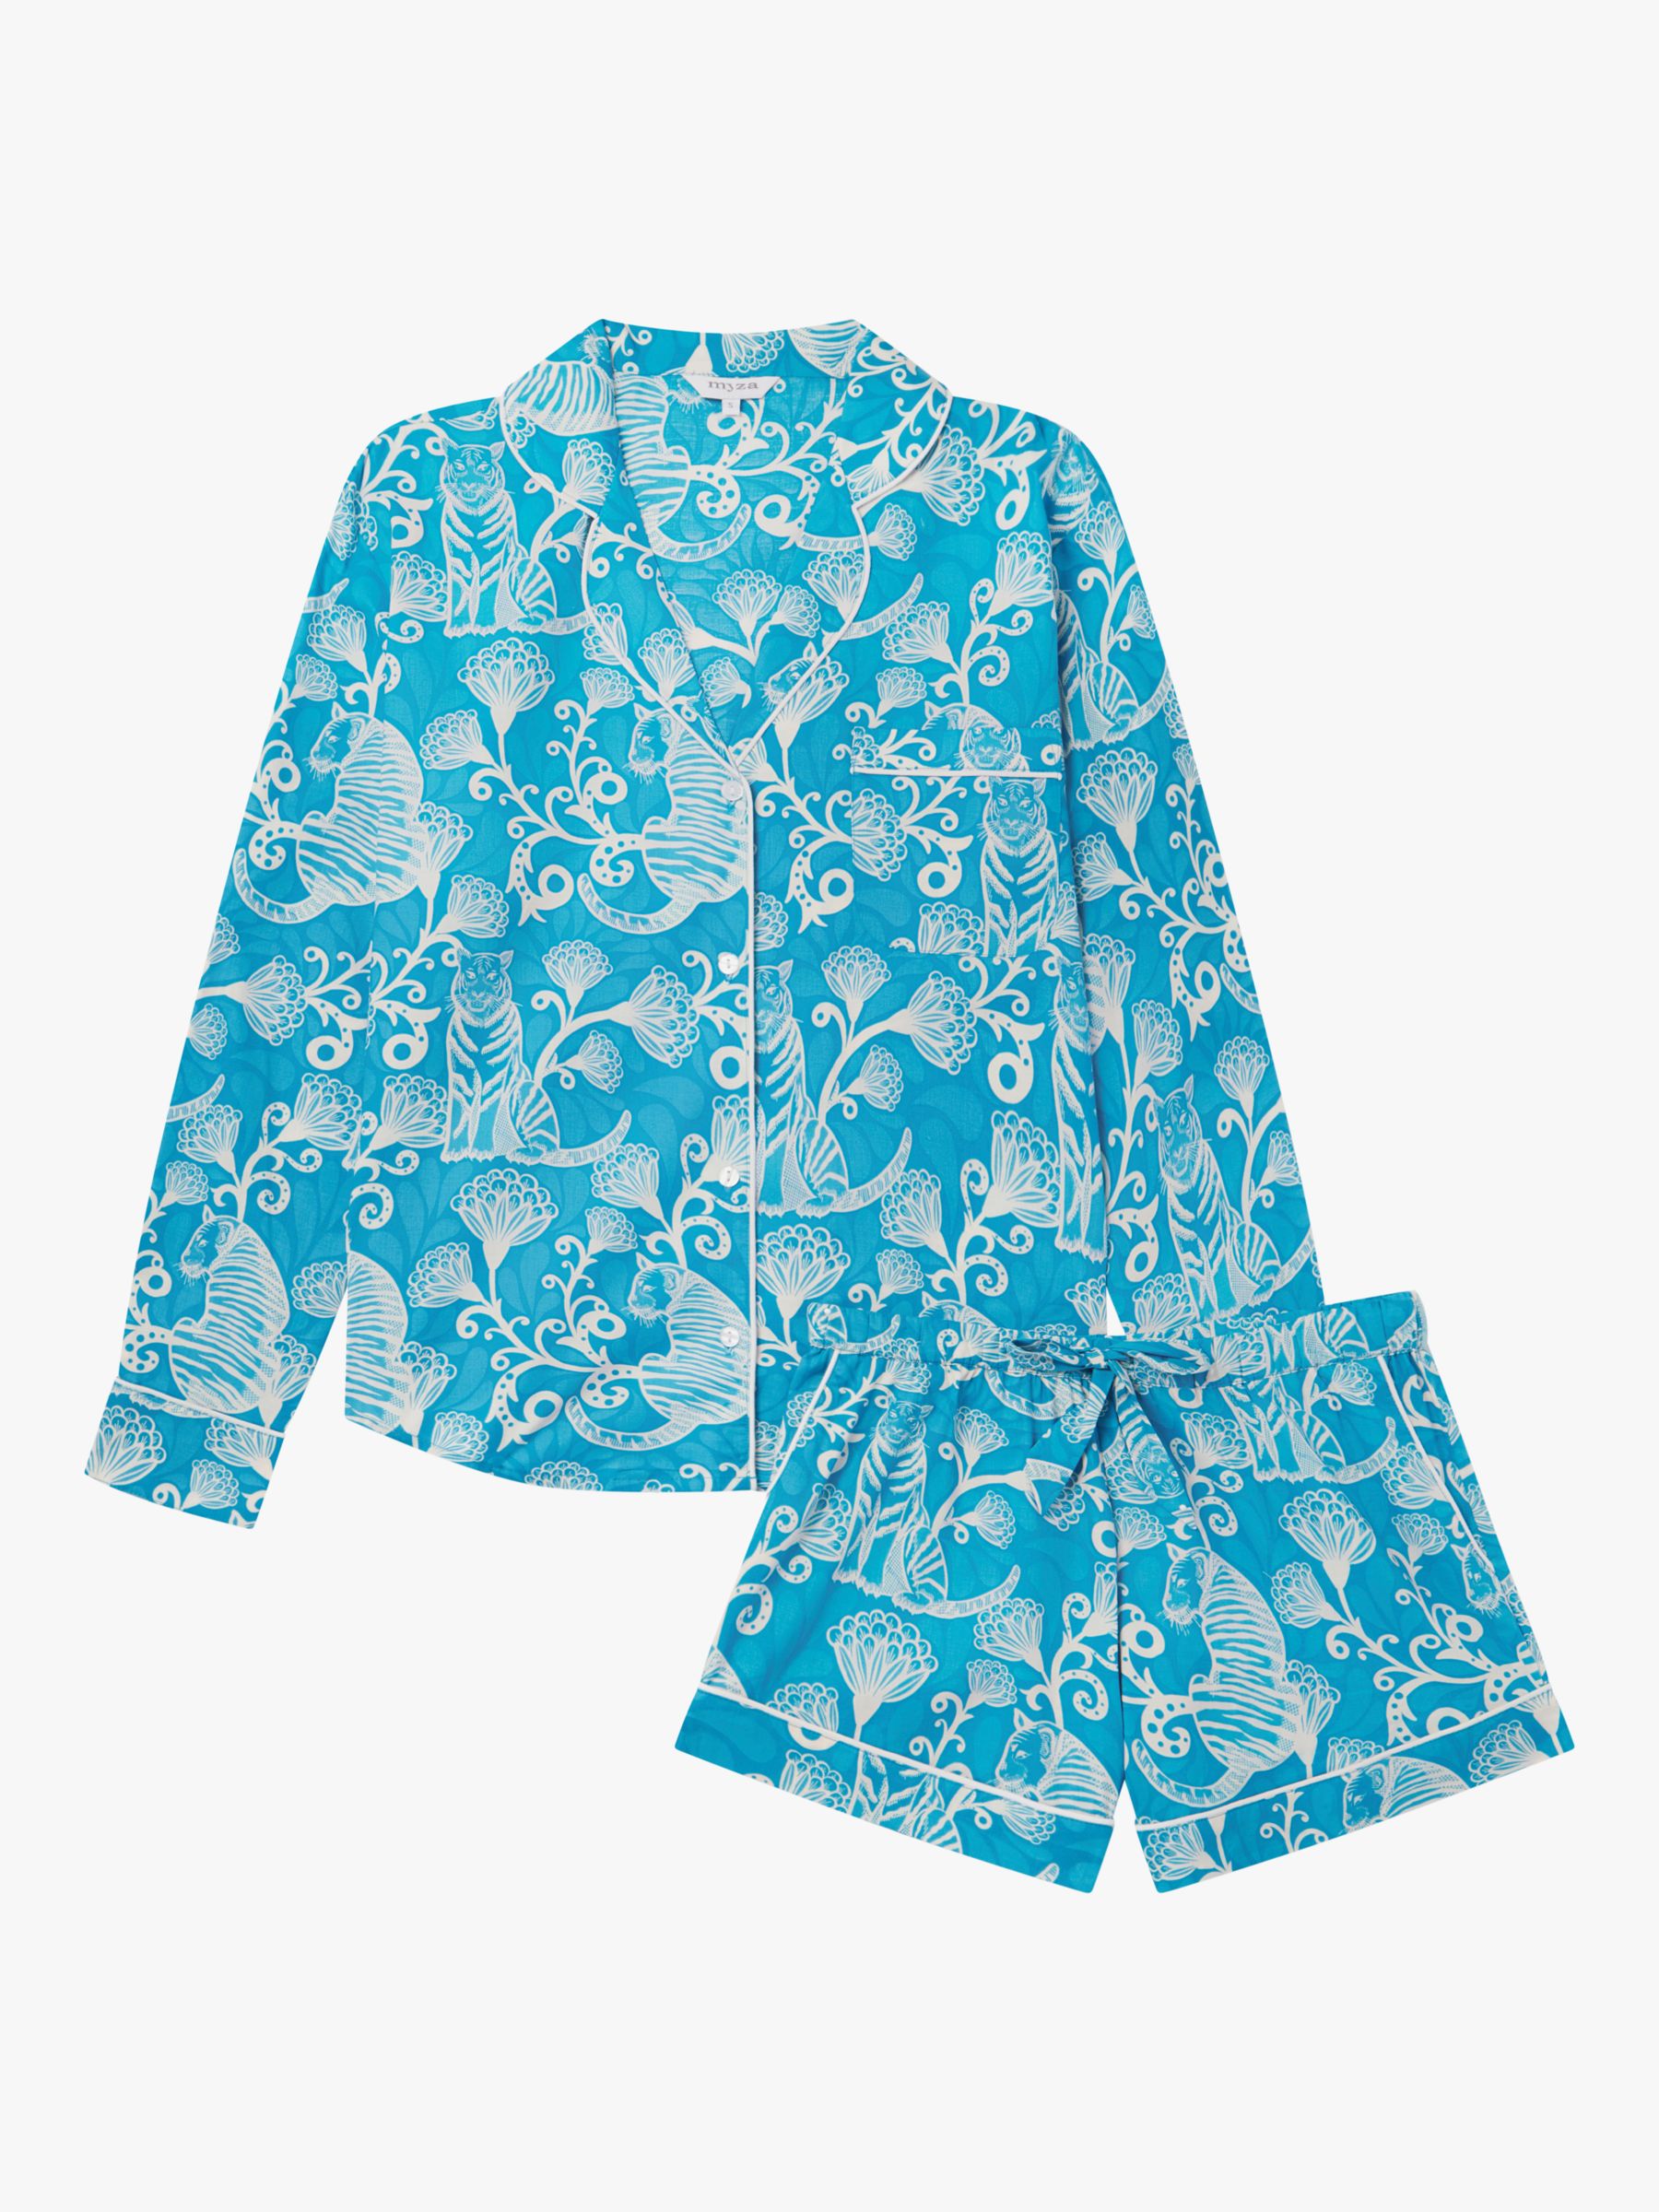 Buy myza Tiger and Floral Organic Cotton Short Pyjamas, Blue Online at johnlewis.com